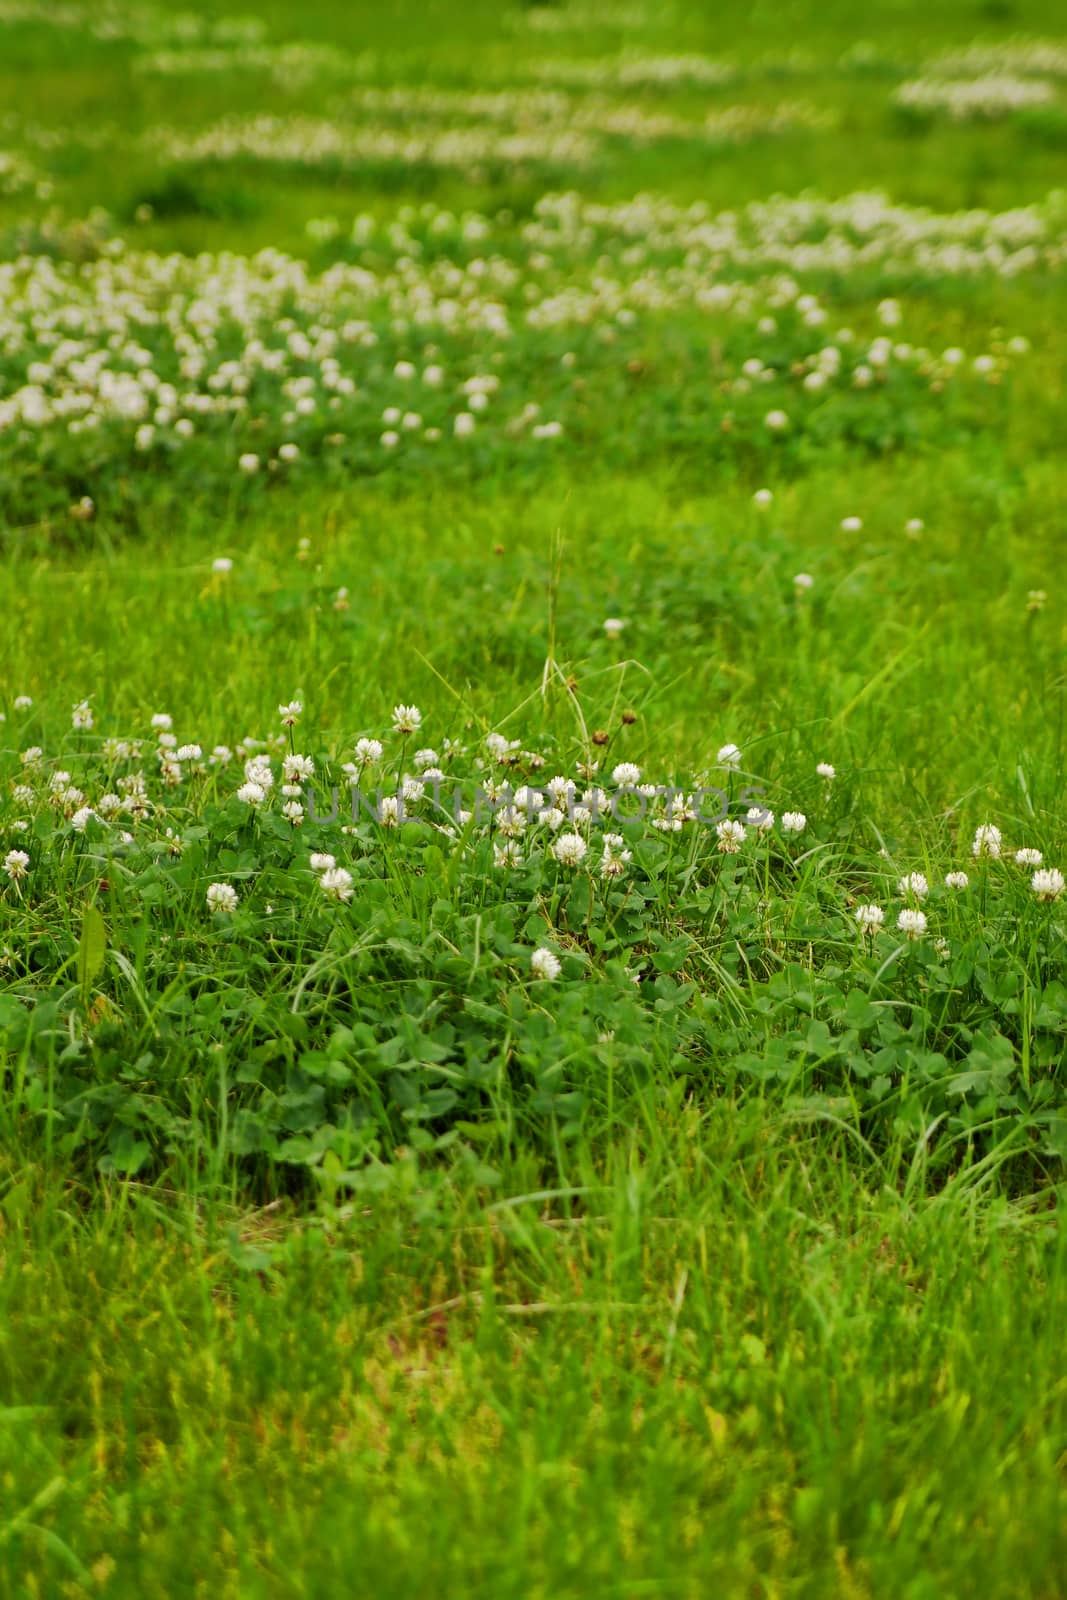 Green grass texture from a field by mowgli